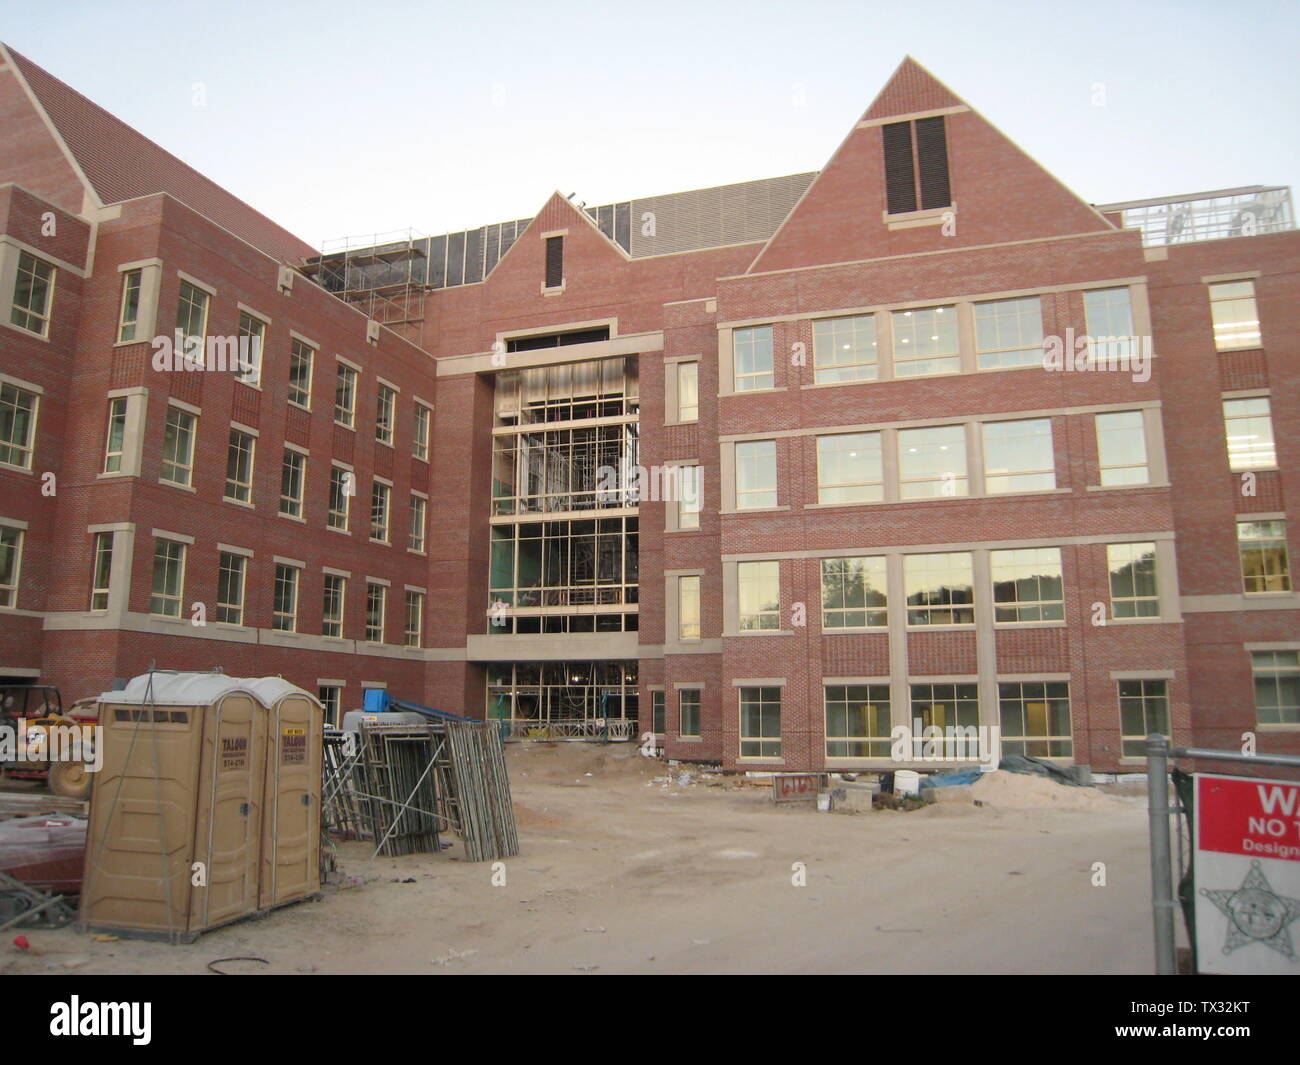 FSU King Building Front; 8 November 2007 (original upload date); Own work; UkrNole 485 at English pedia; Stock Photo